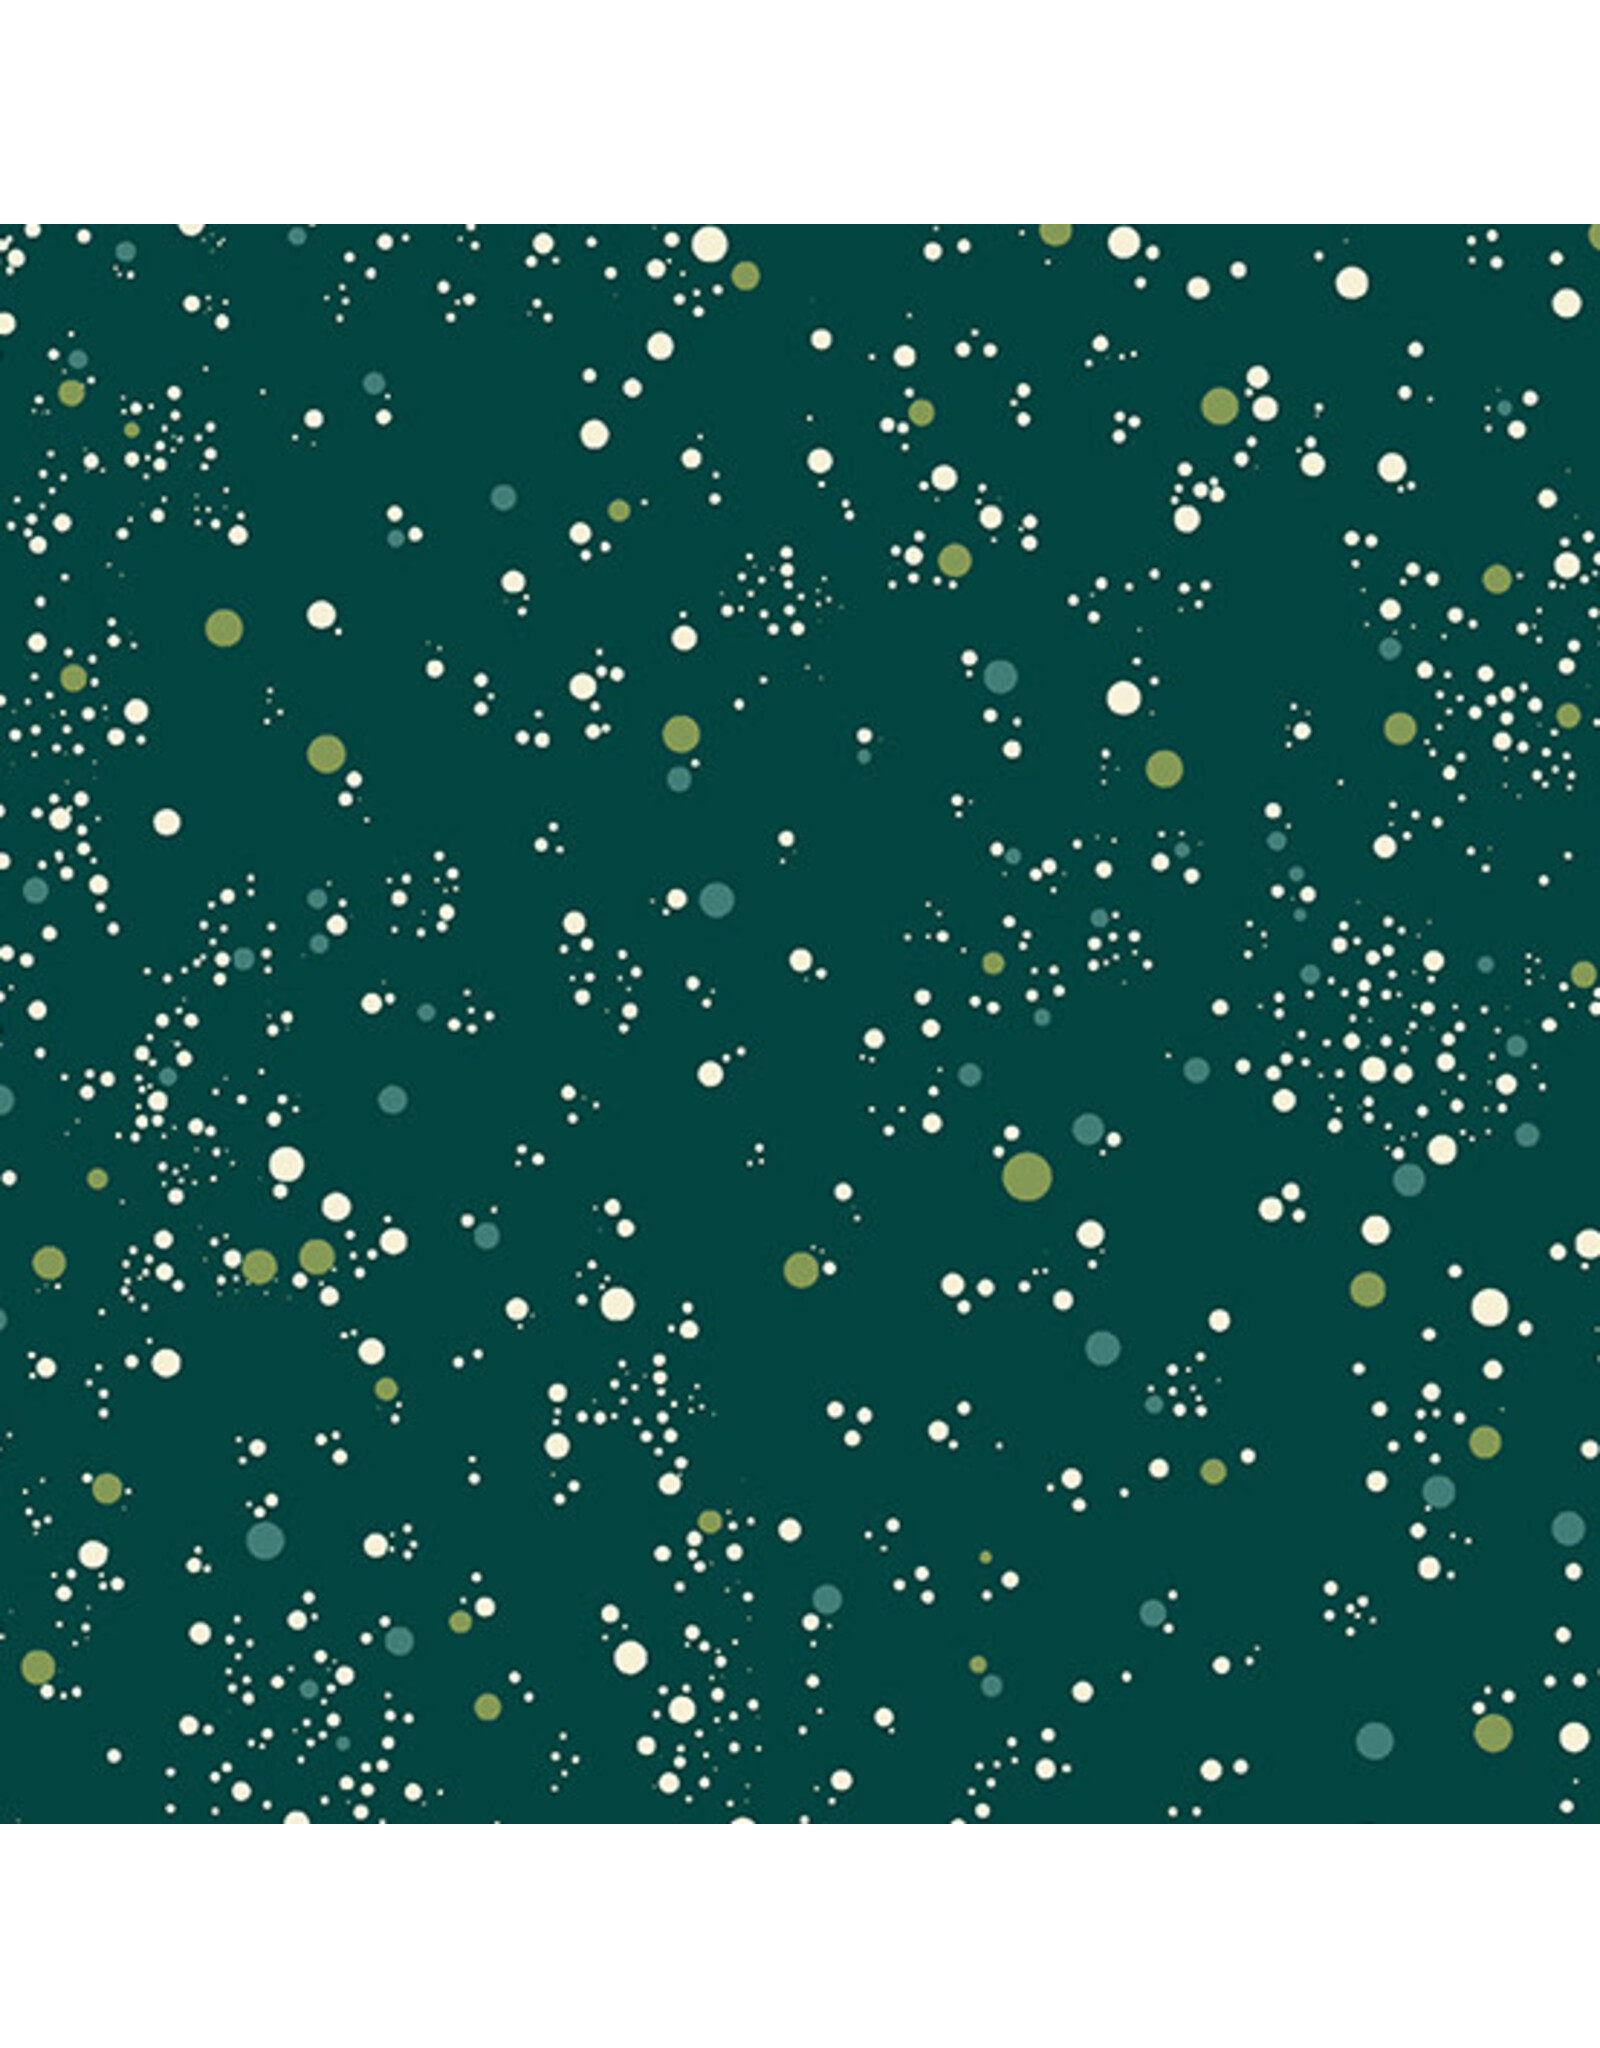 Andover Giucy Giuce - Natale - Snowfall Dots Verde Acqua - A-676-G